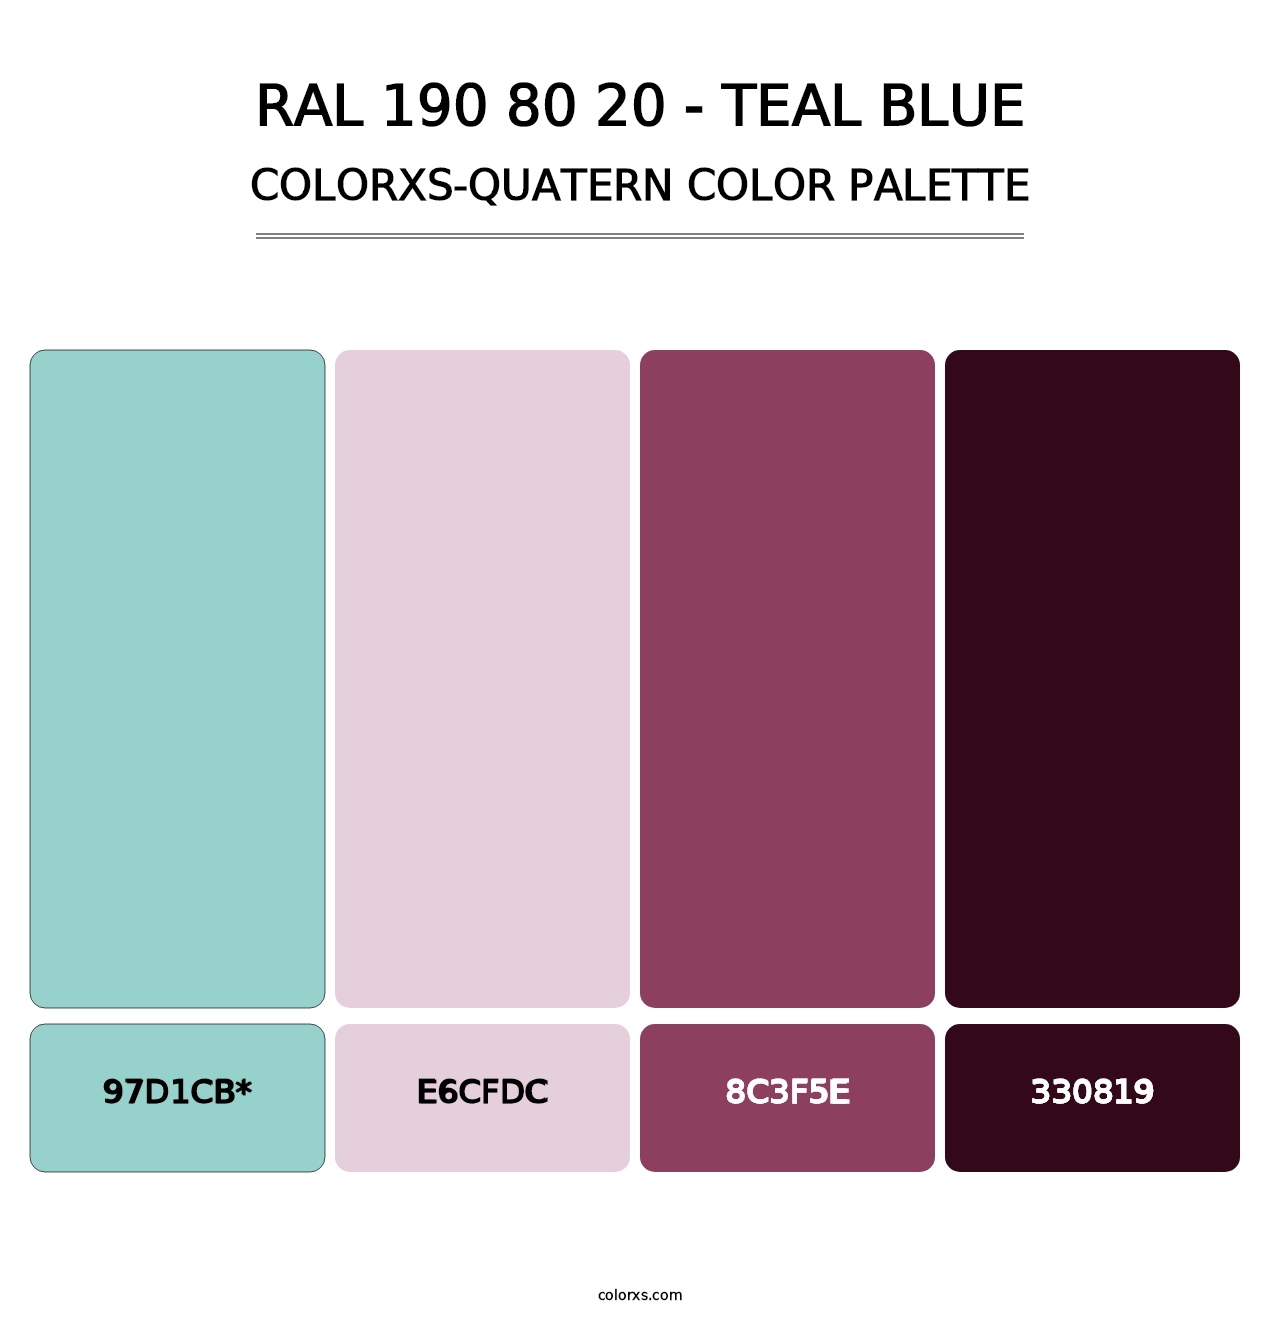 RAL 190 80 20 - Teal Blue - Colorxs Quatern Palette